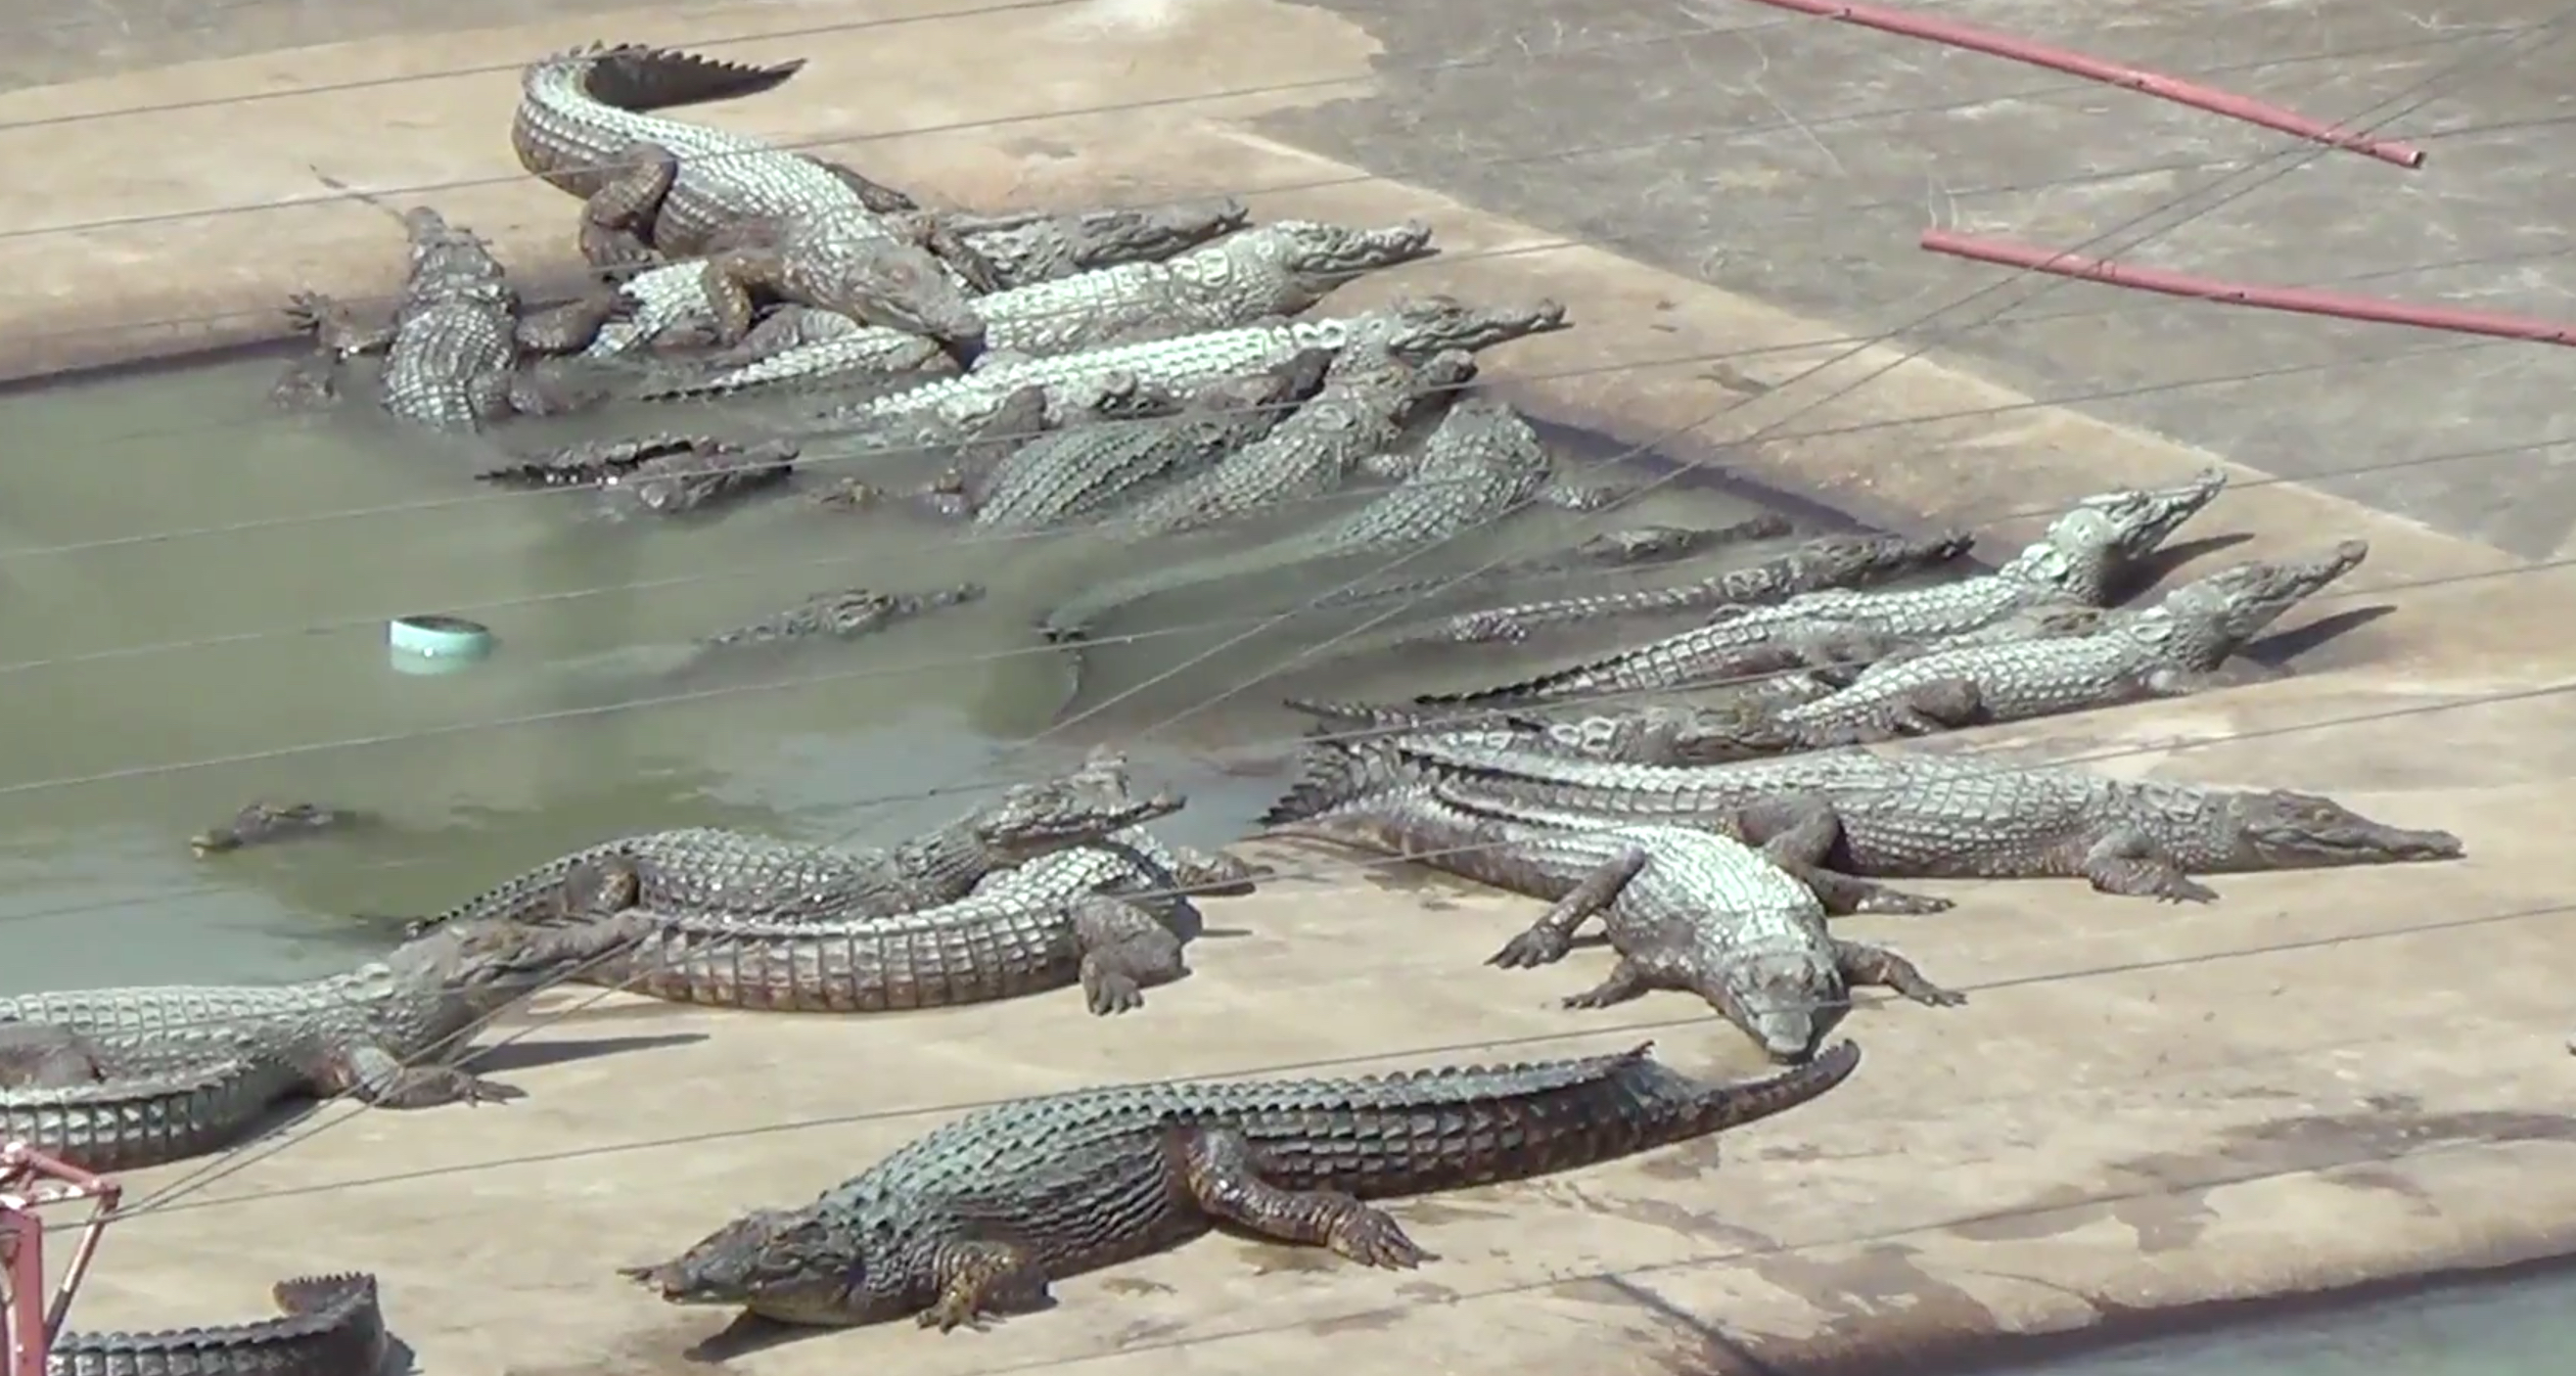 Hermès is exploiting Australian crocodiles